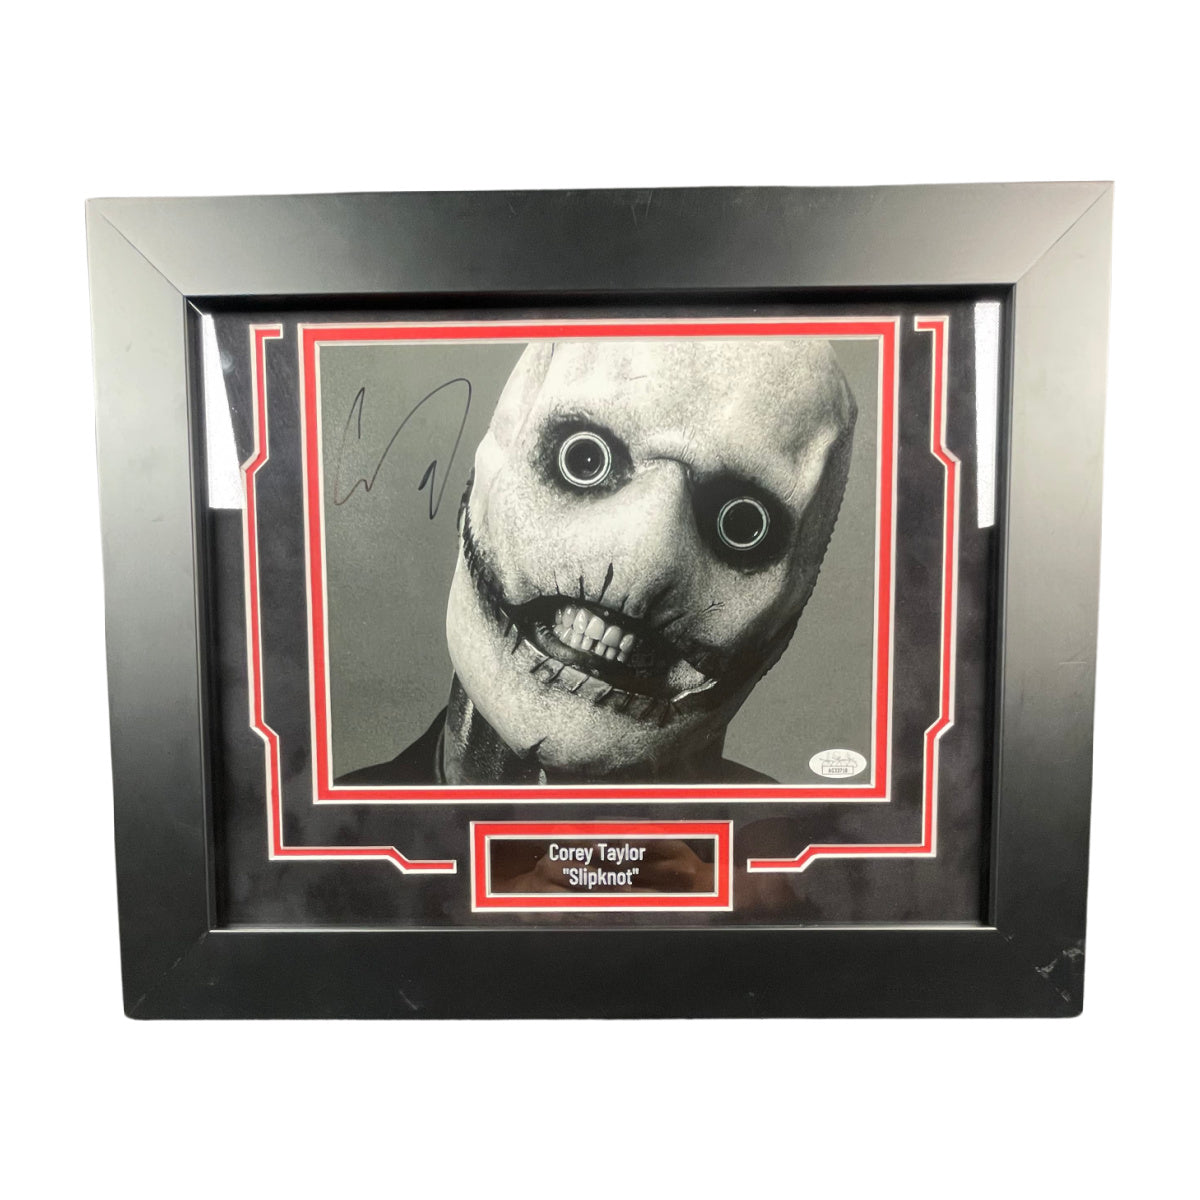 Corey Taylor Signed 8x10 Photo Framed Slipknot Autographed JSA COA